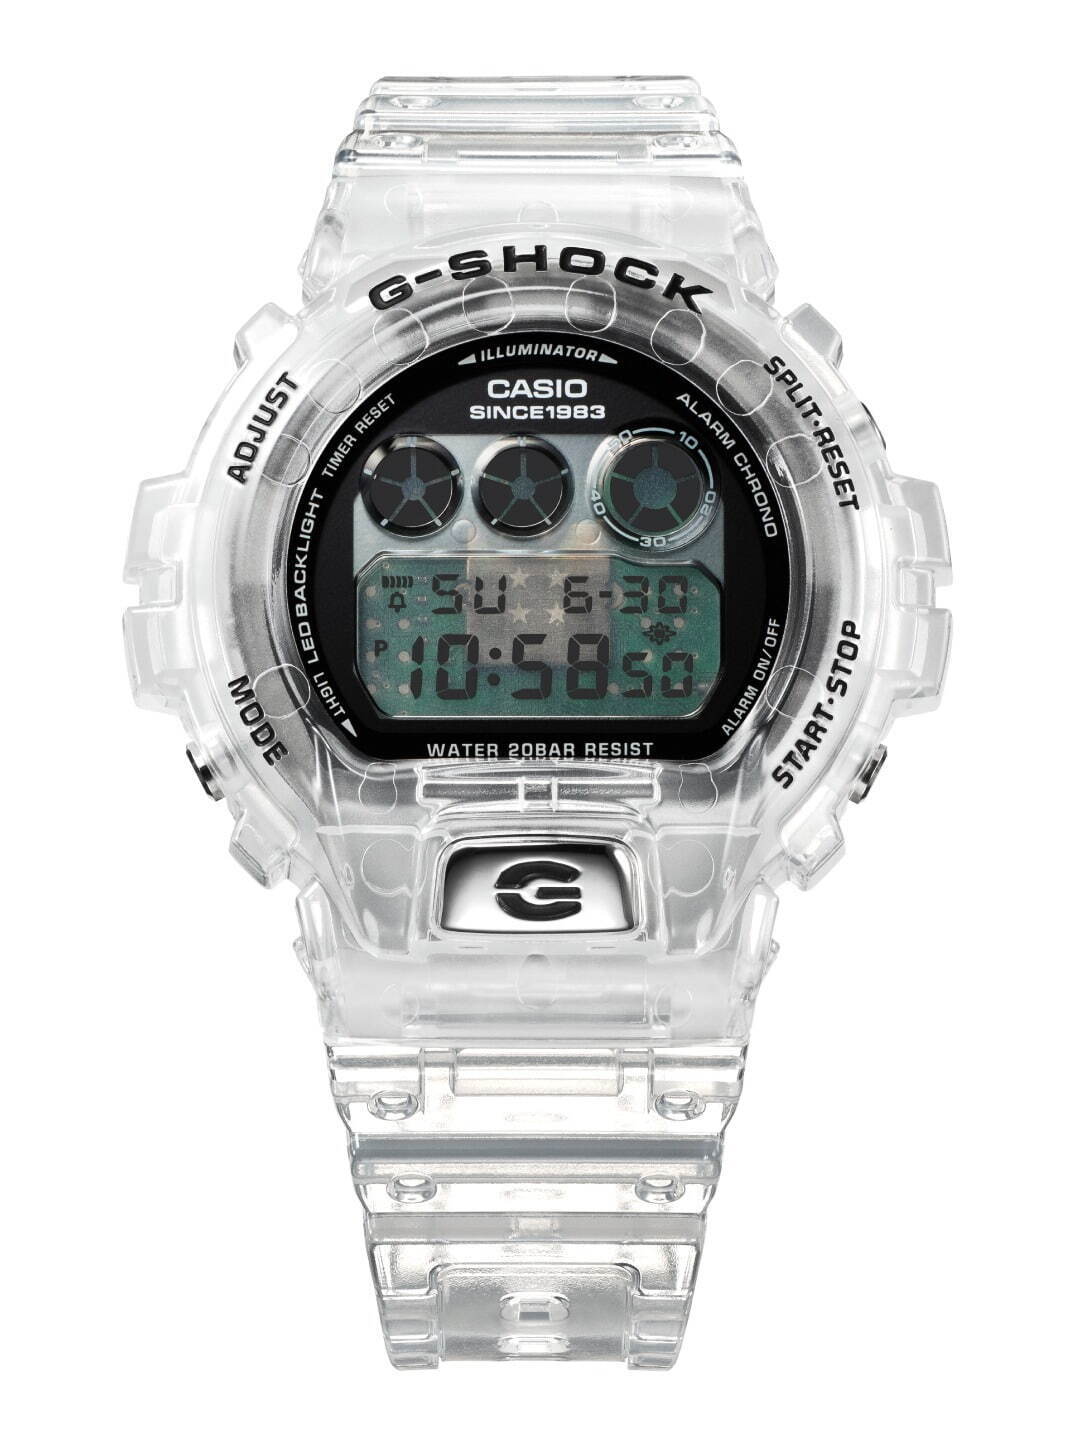 G-SHOCKの新作腕時計「クリア リミックス」内部構造や基板が見える